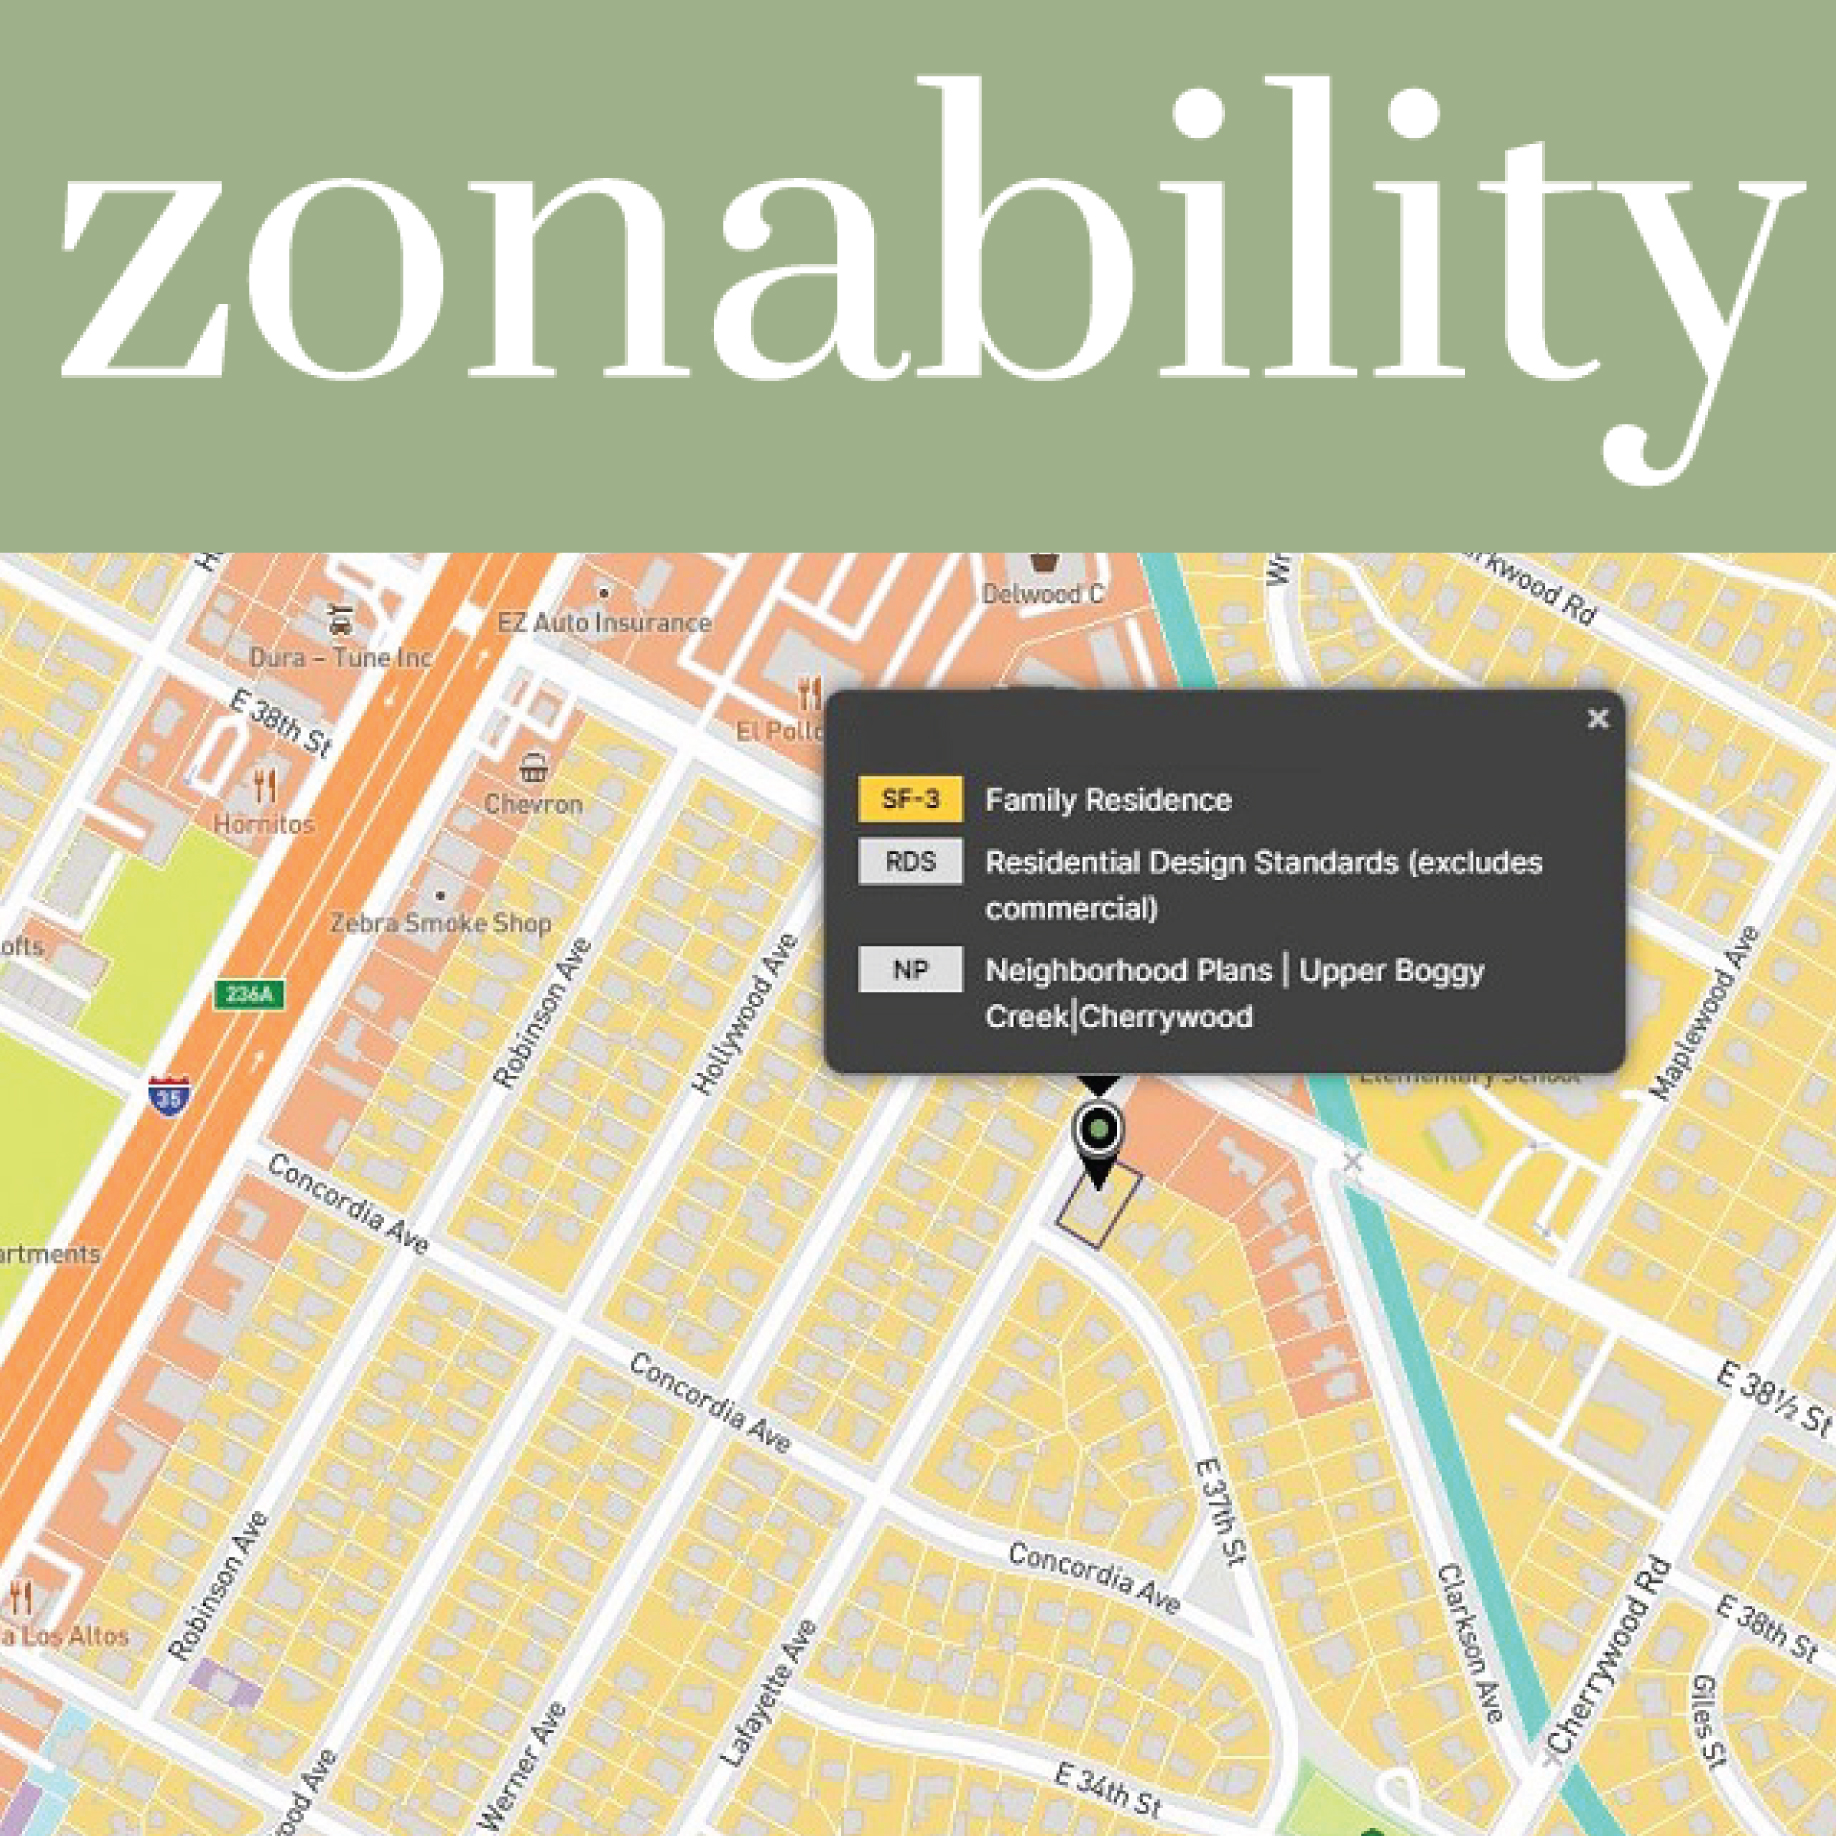 Zonability Data Driven